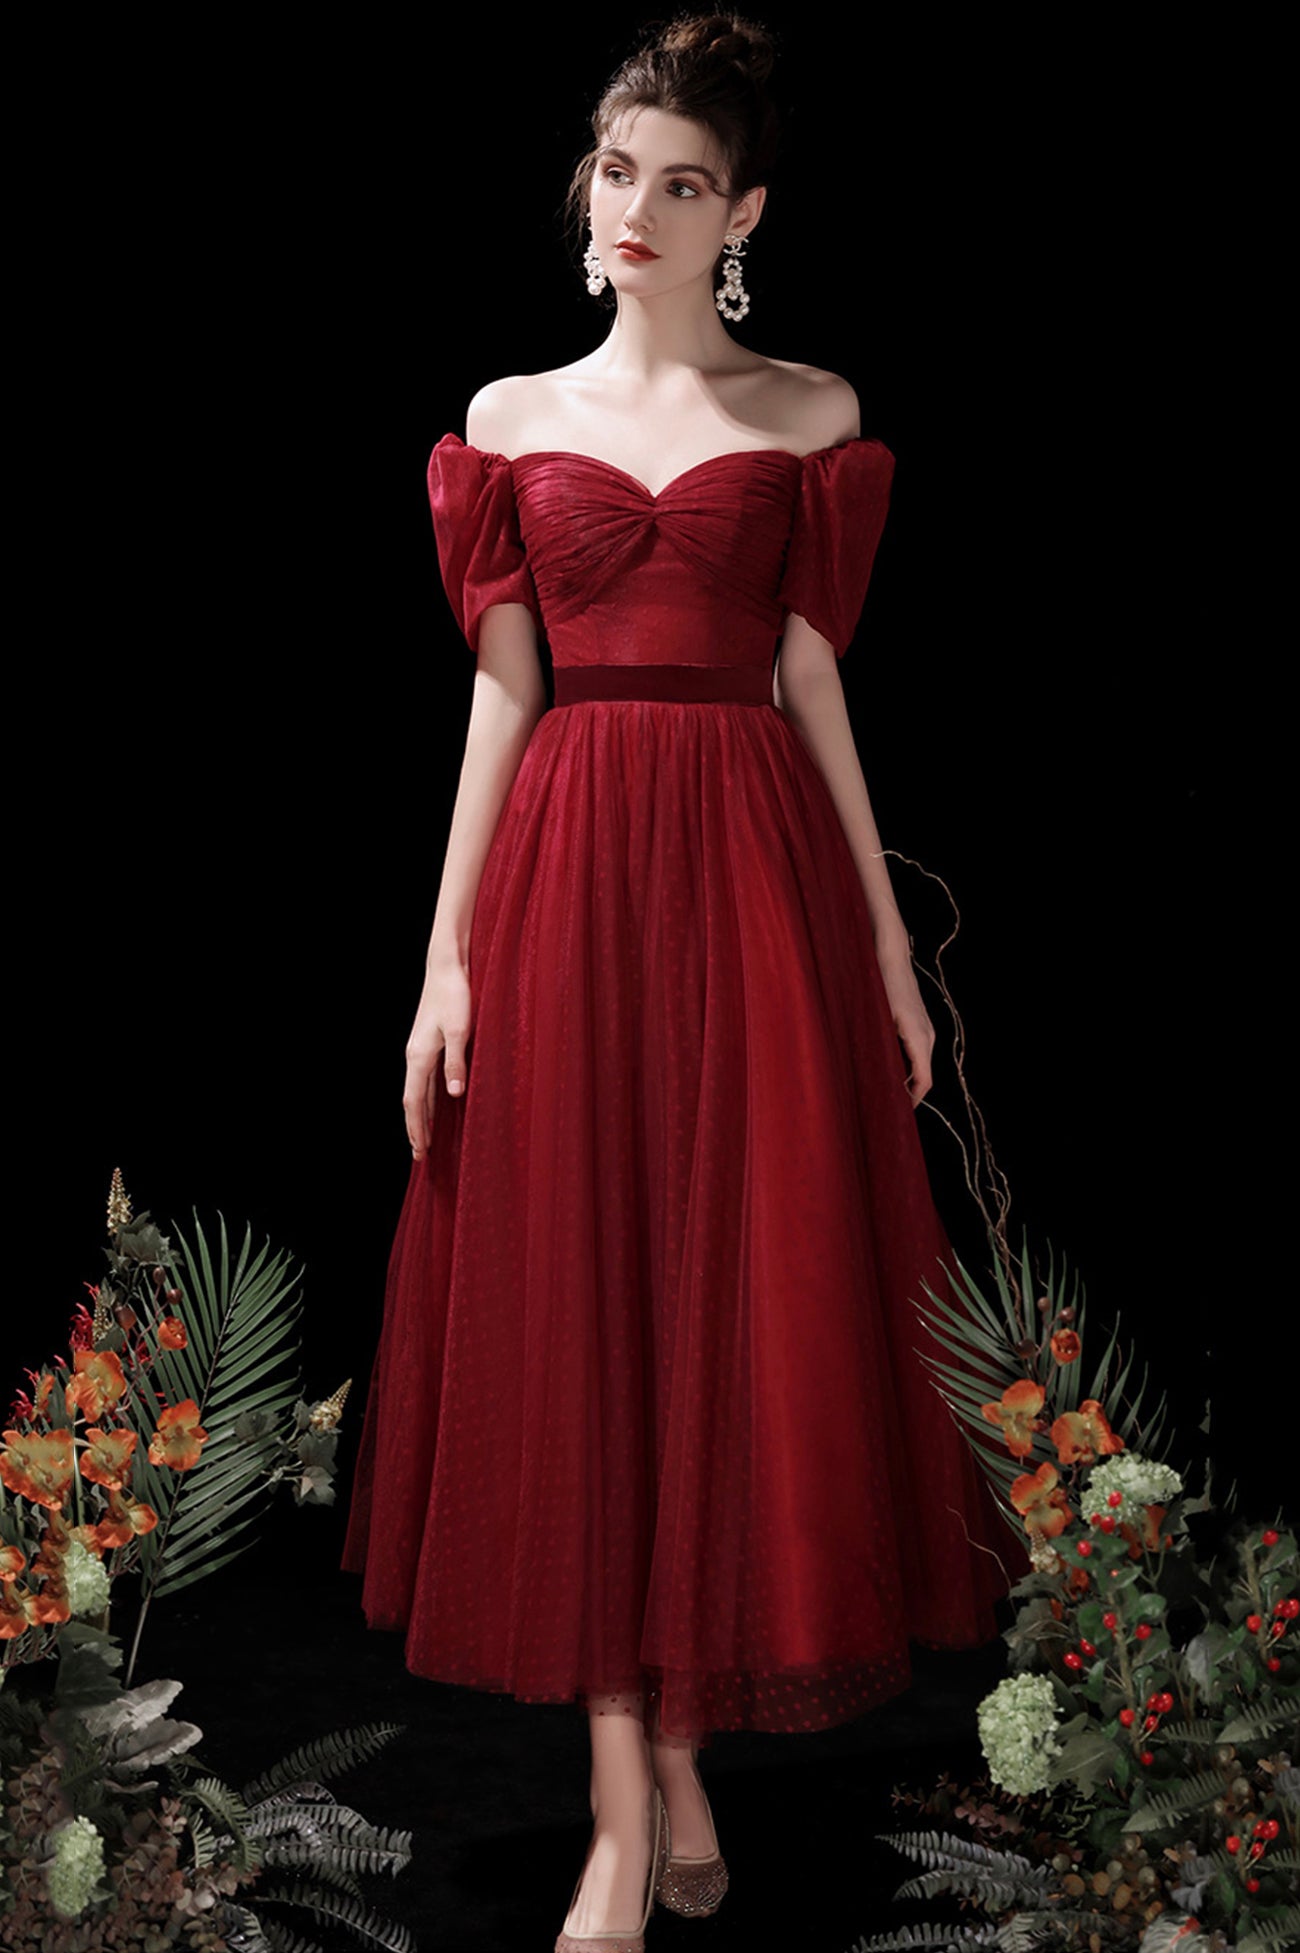 Burgundy A-Line Tulle Short Prom Dress, Cute Short Sleeve Homecoming Dress